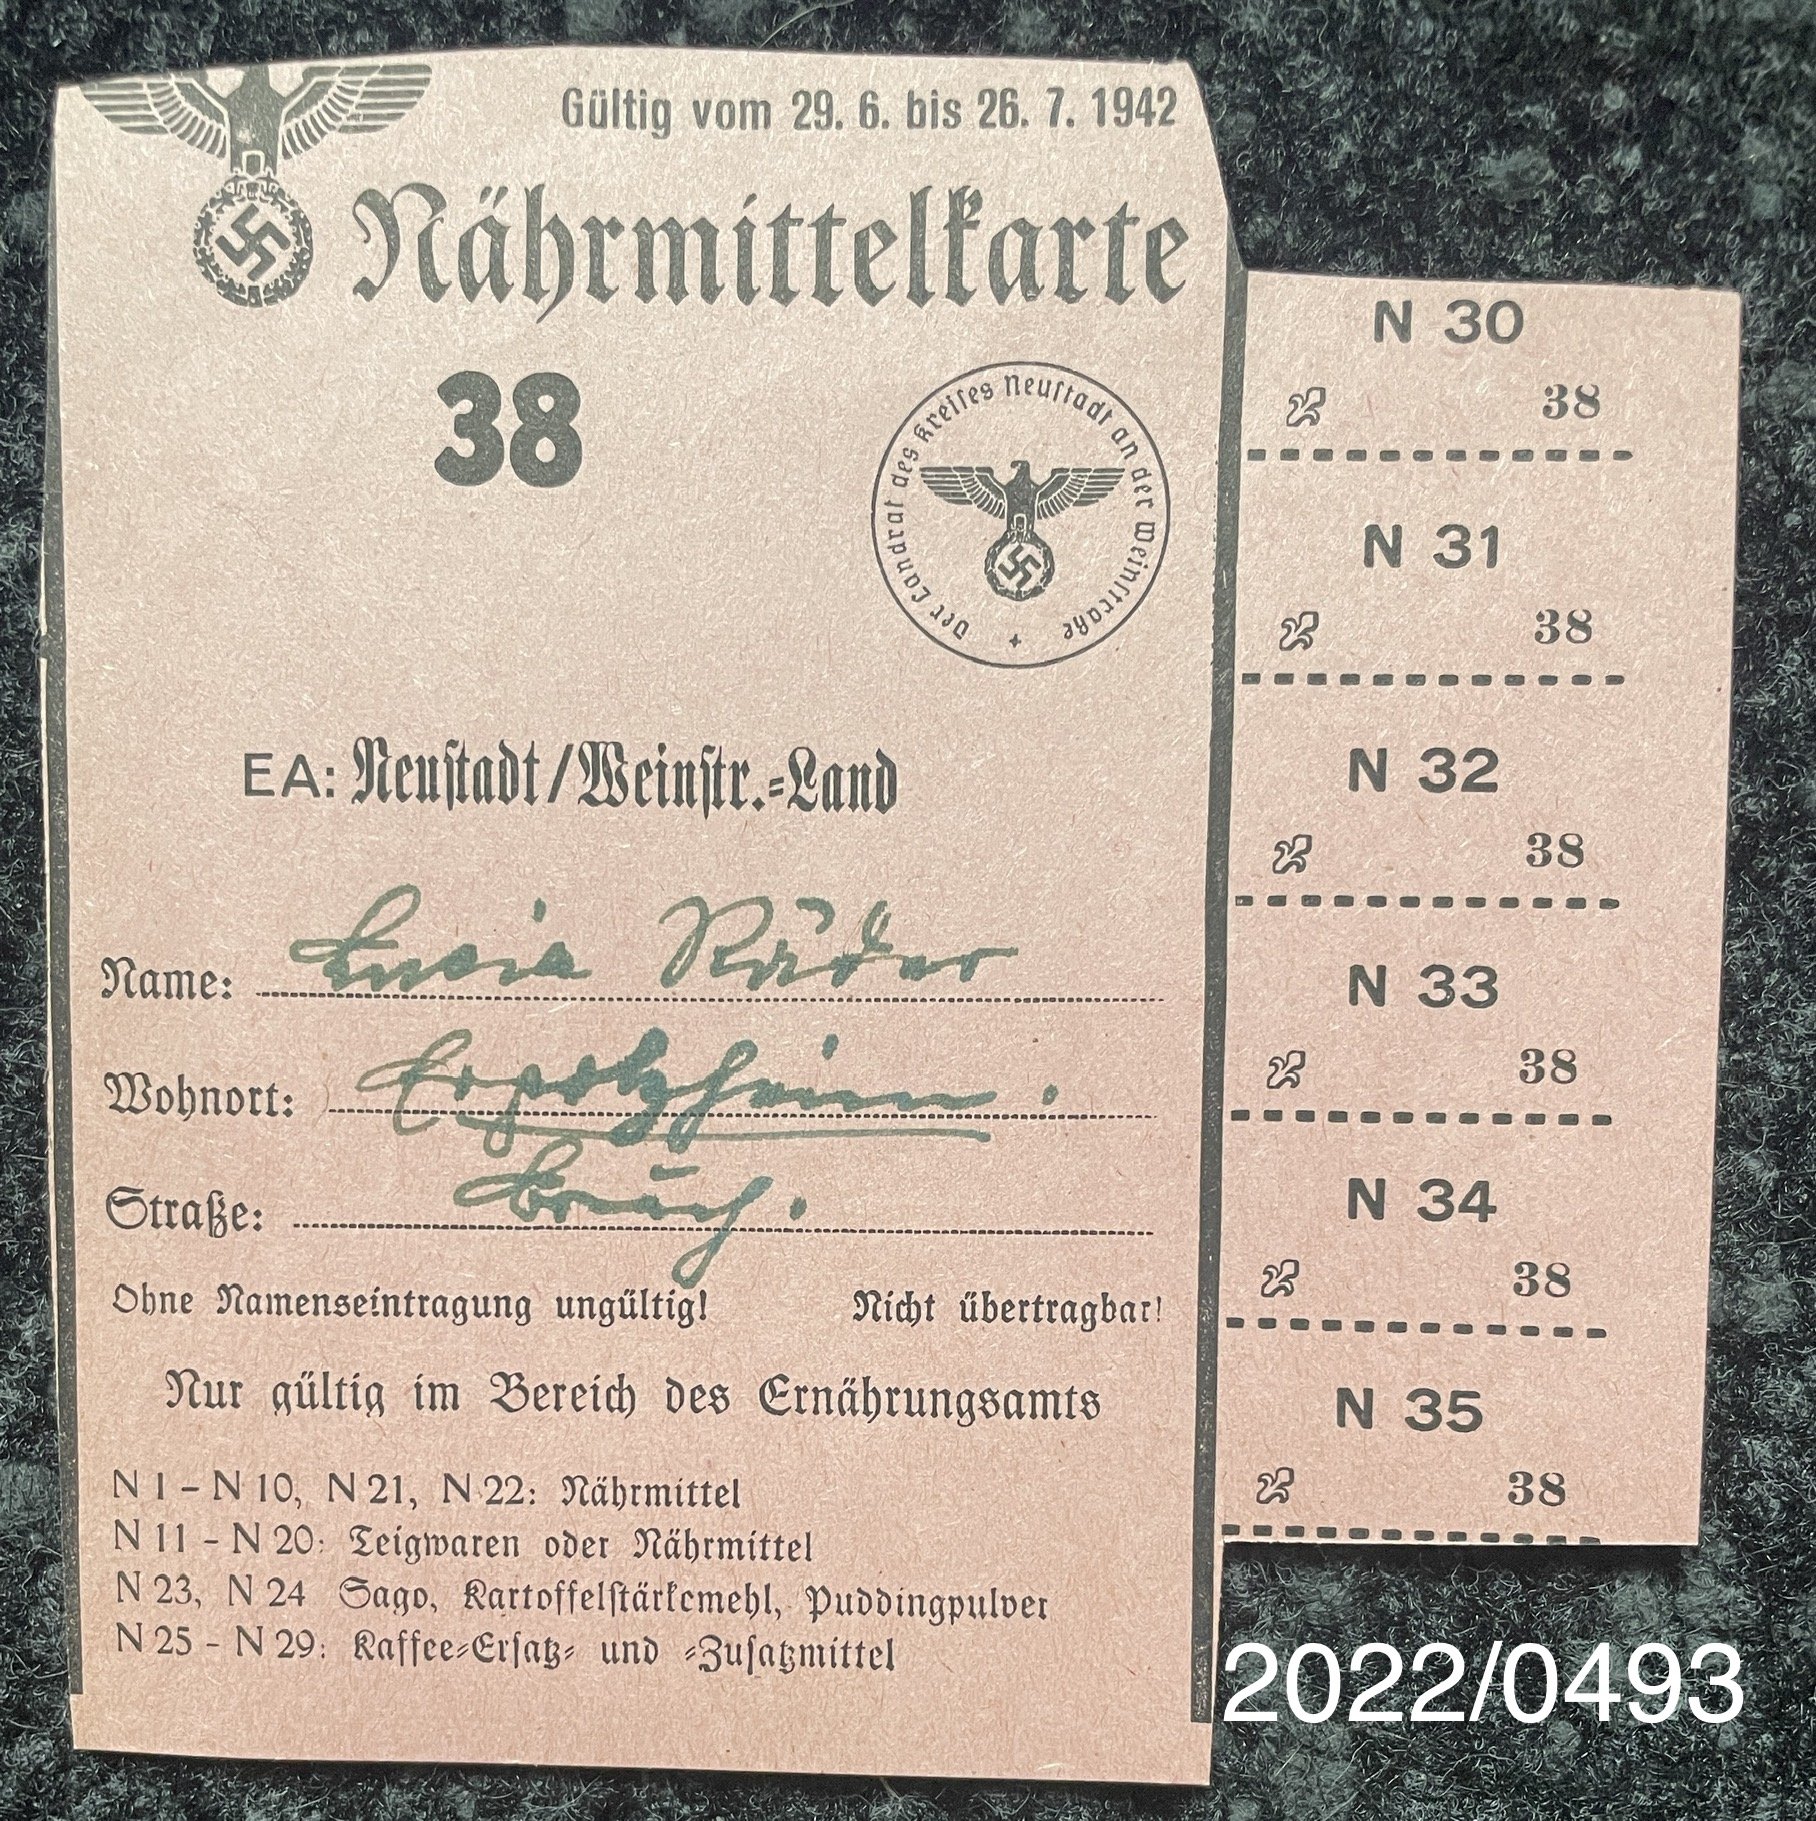 Nährmittelkarte Nr. 38 1942 (Stadtmuseum Bad Dürkheim im Kulturzentrum Haus Catoir CC BY-NC-SA)